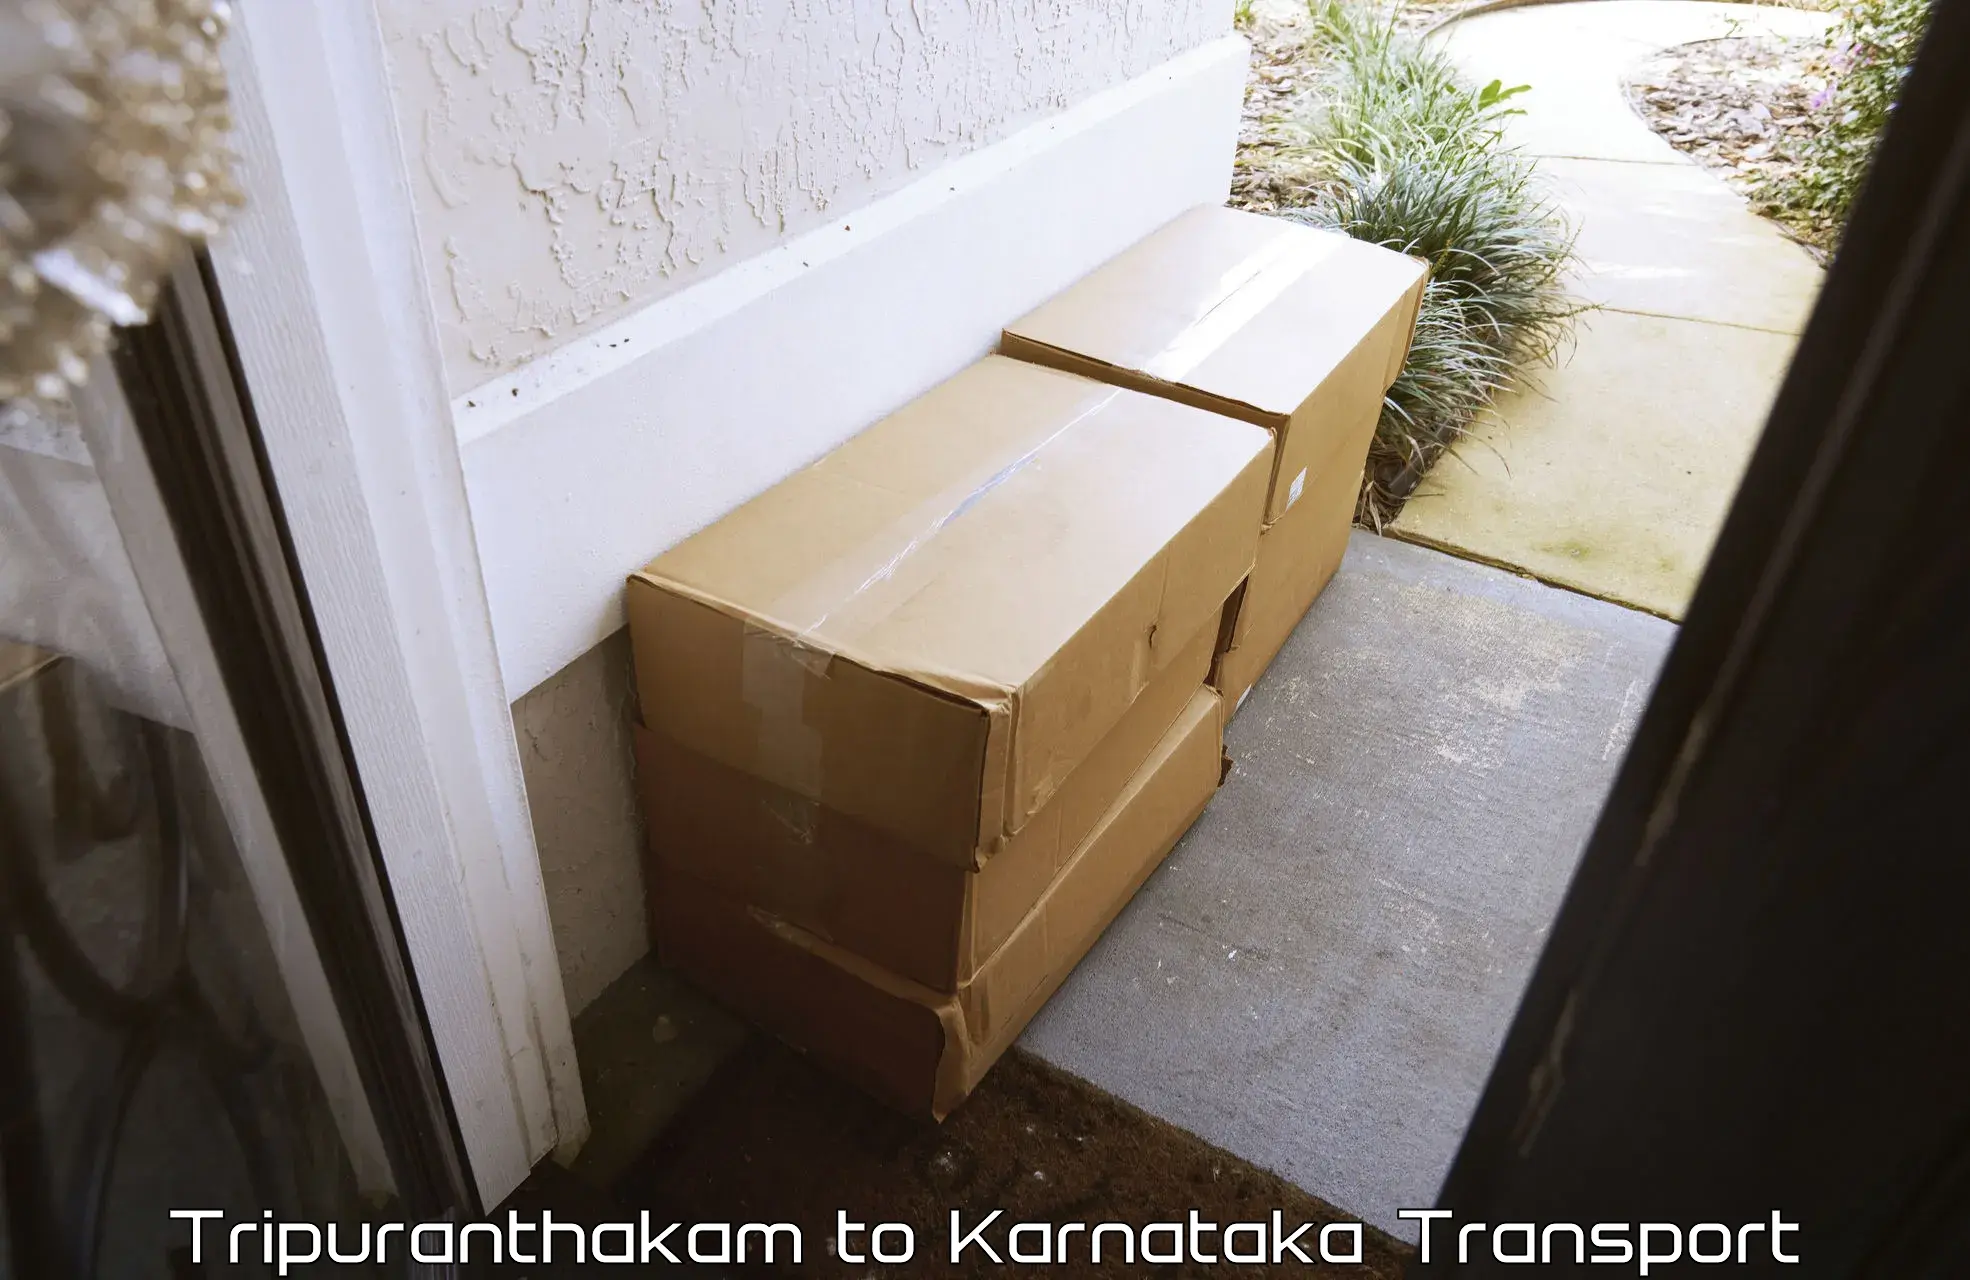 Parcel transport services Tripuranthakam to Bangalore